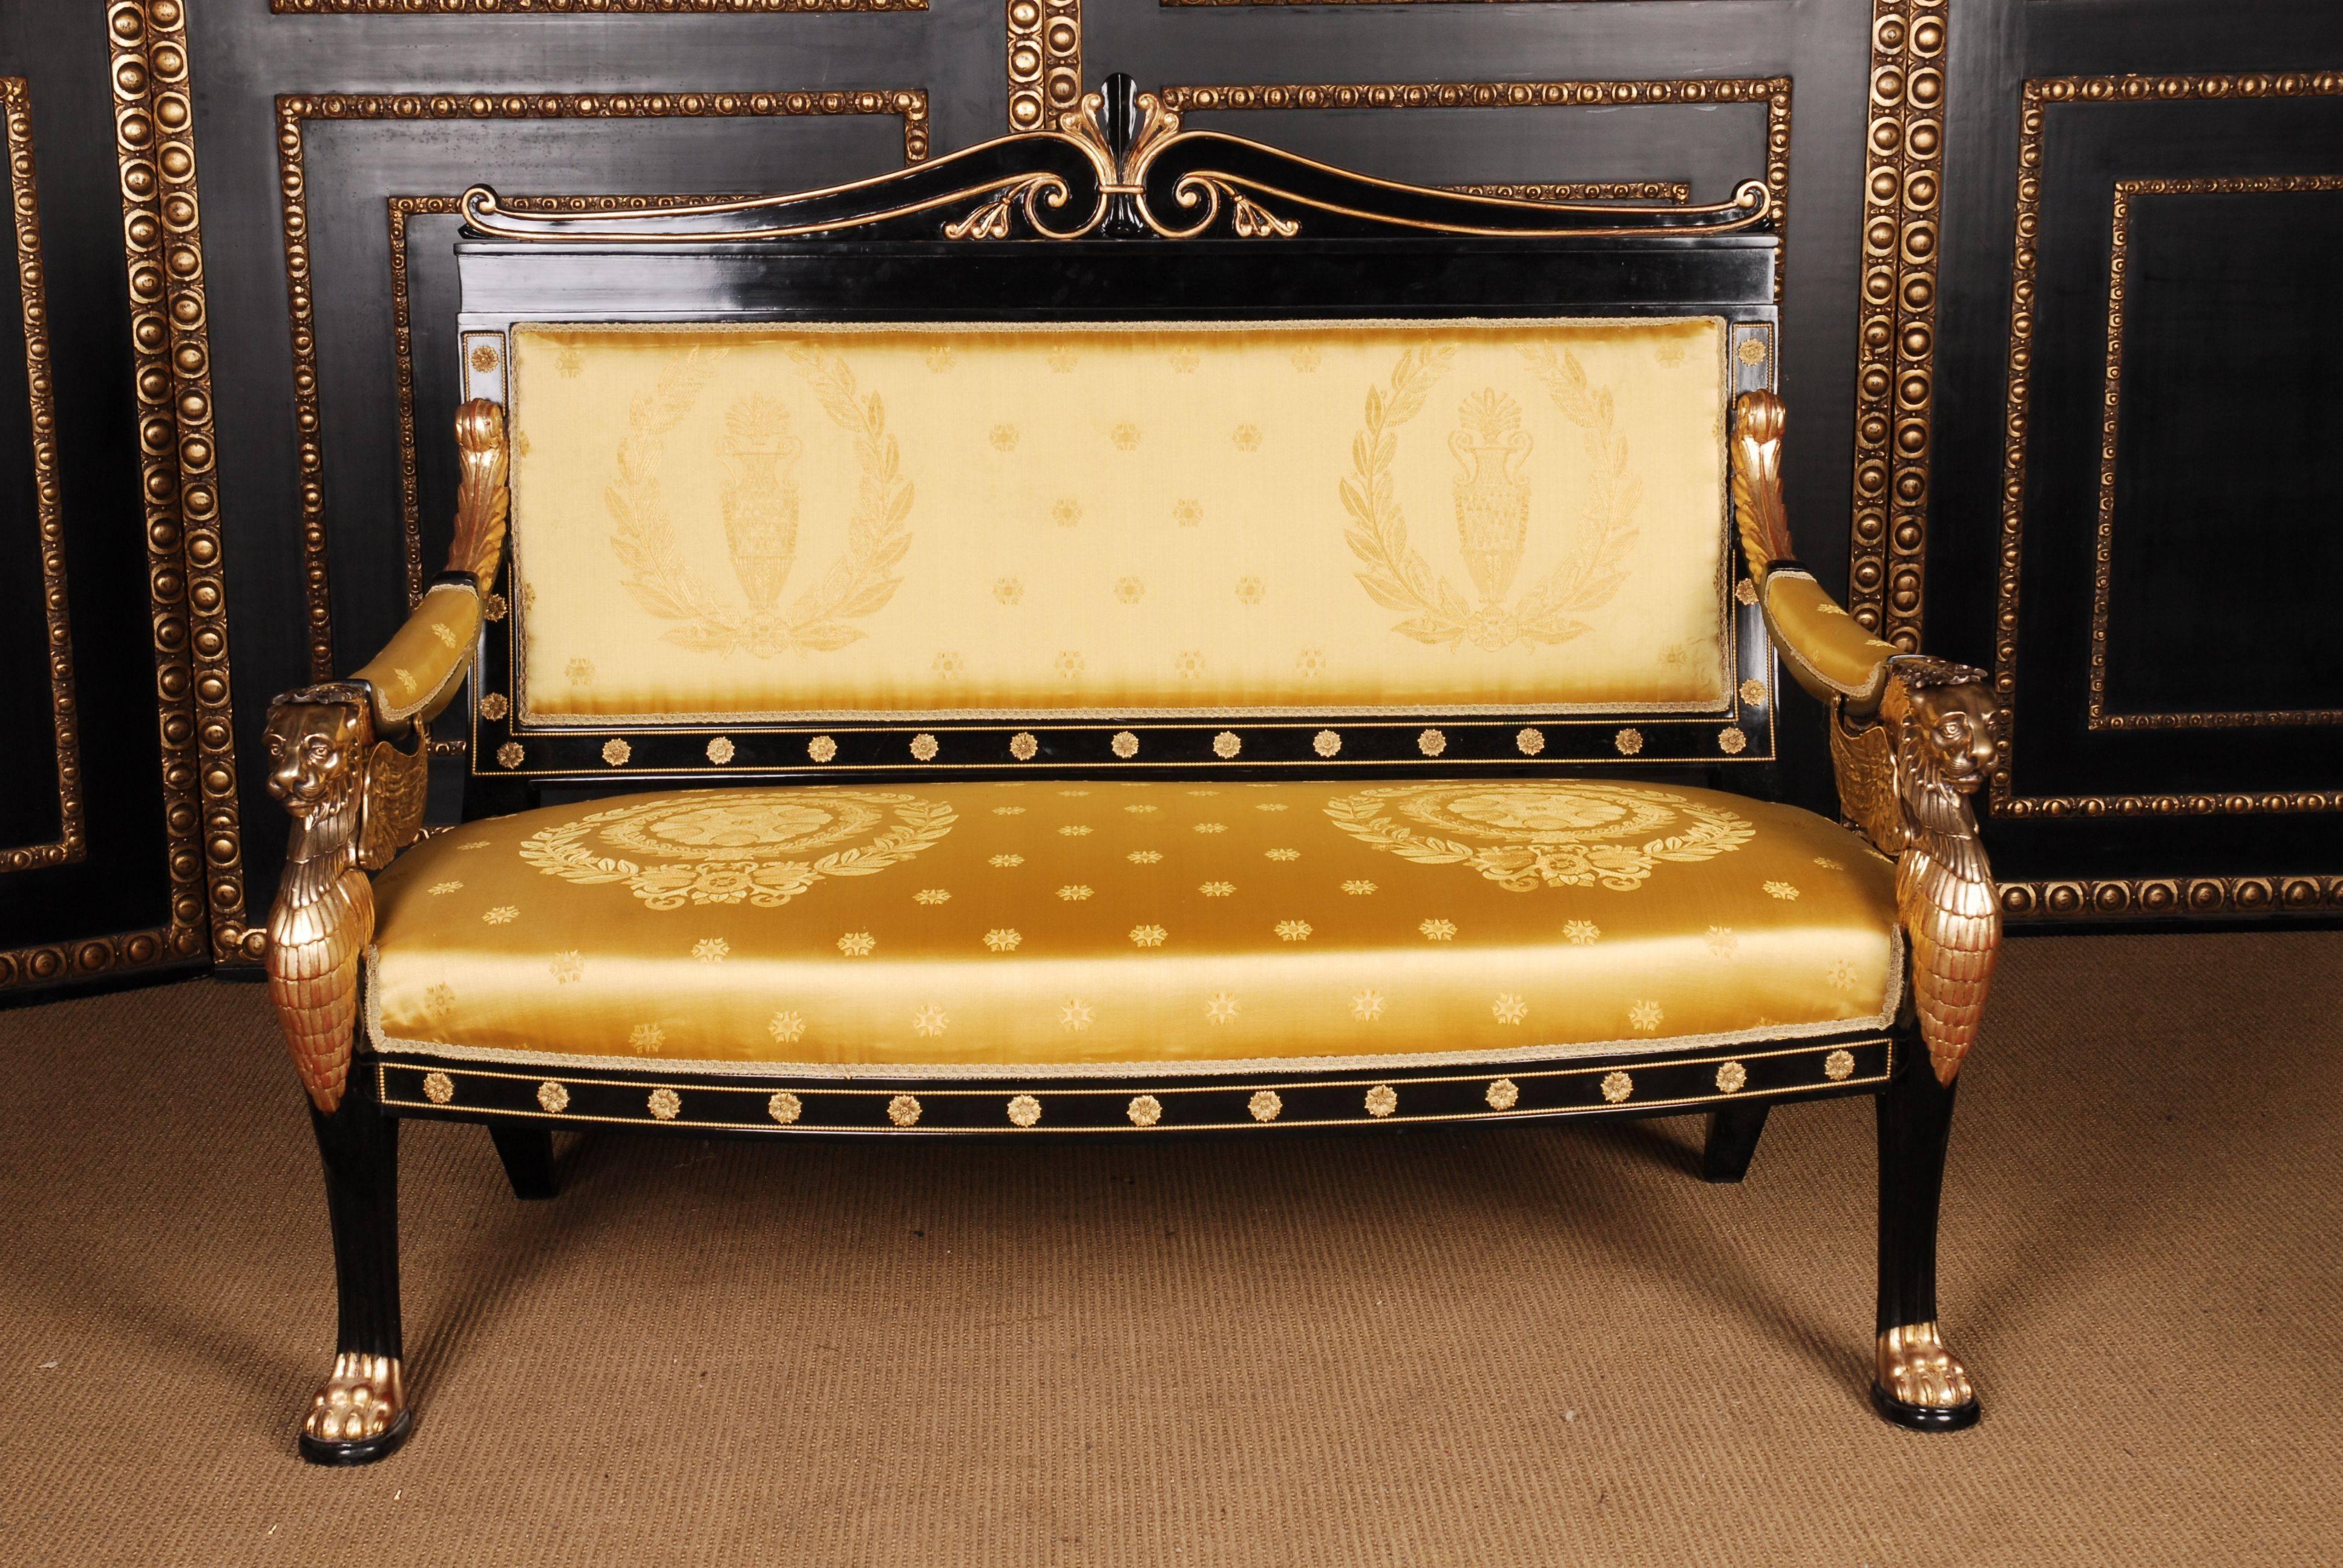 20th Century Empire Style Lion Kanapee Sofa For Sale 1